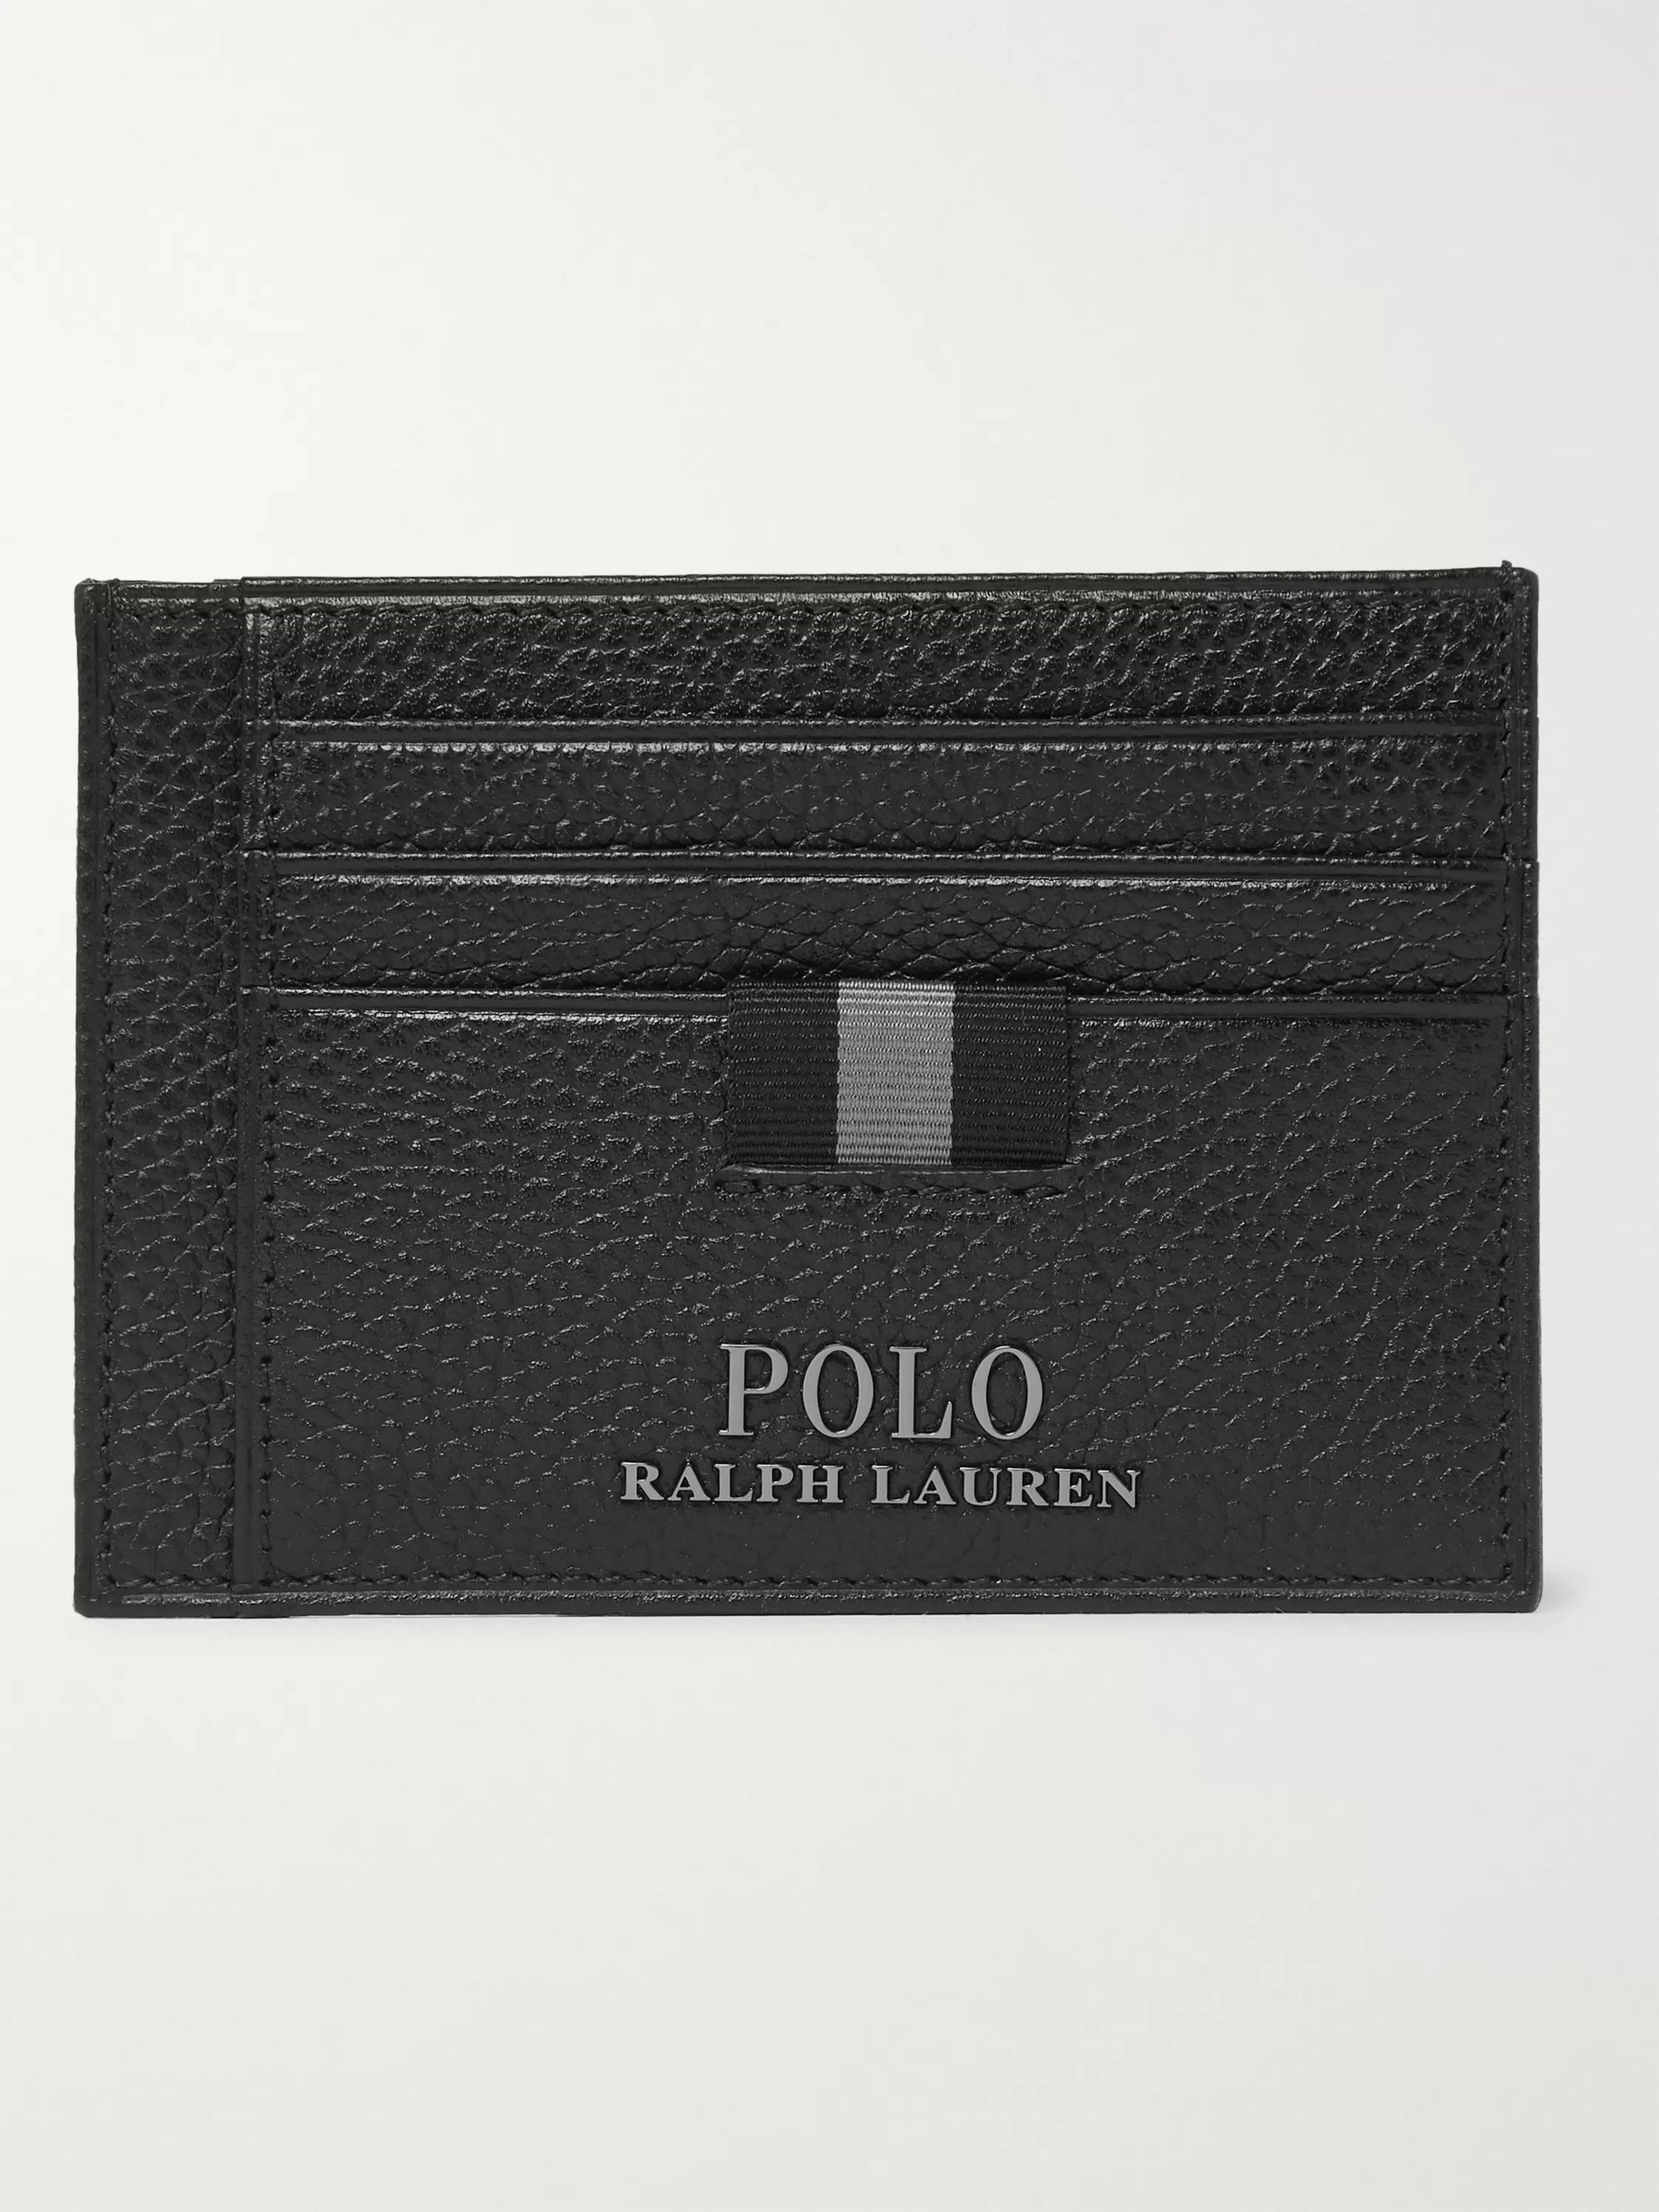 ralph lauren card wallet